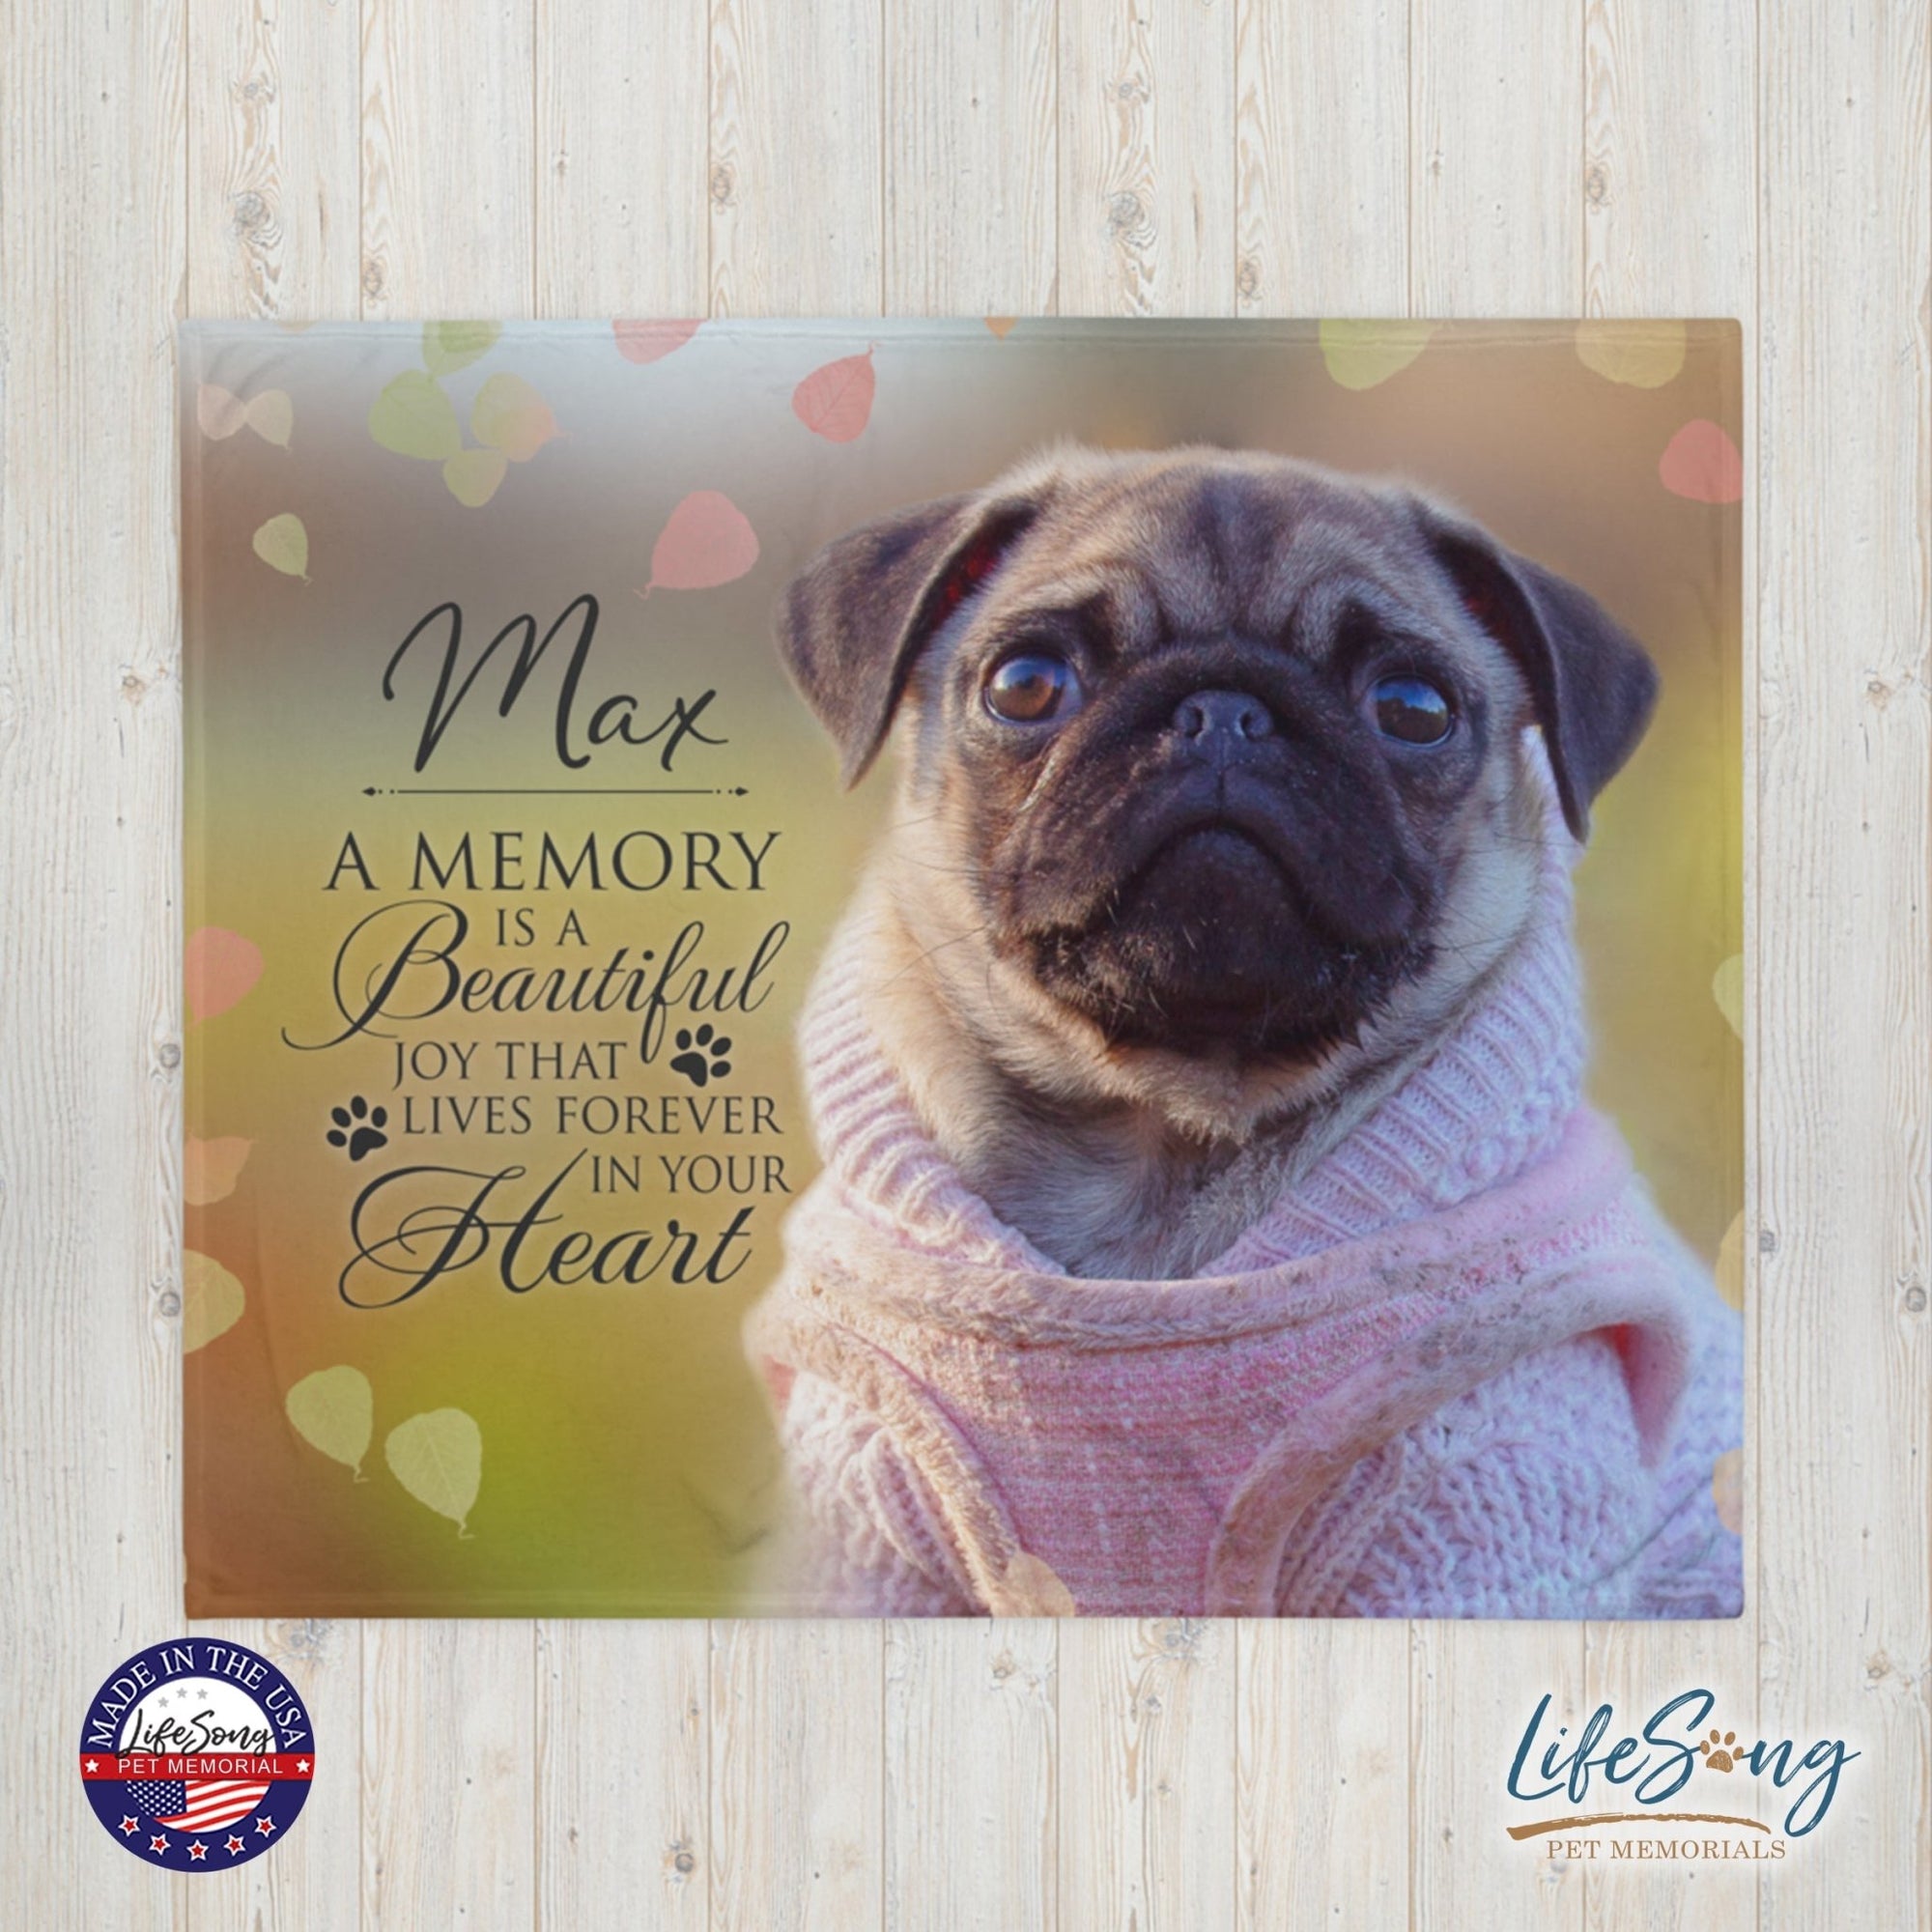 Personalized Pet Memorial Printed Throw Blanket - A Memory Is A Beautiful Joy - LifeSong Milestones